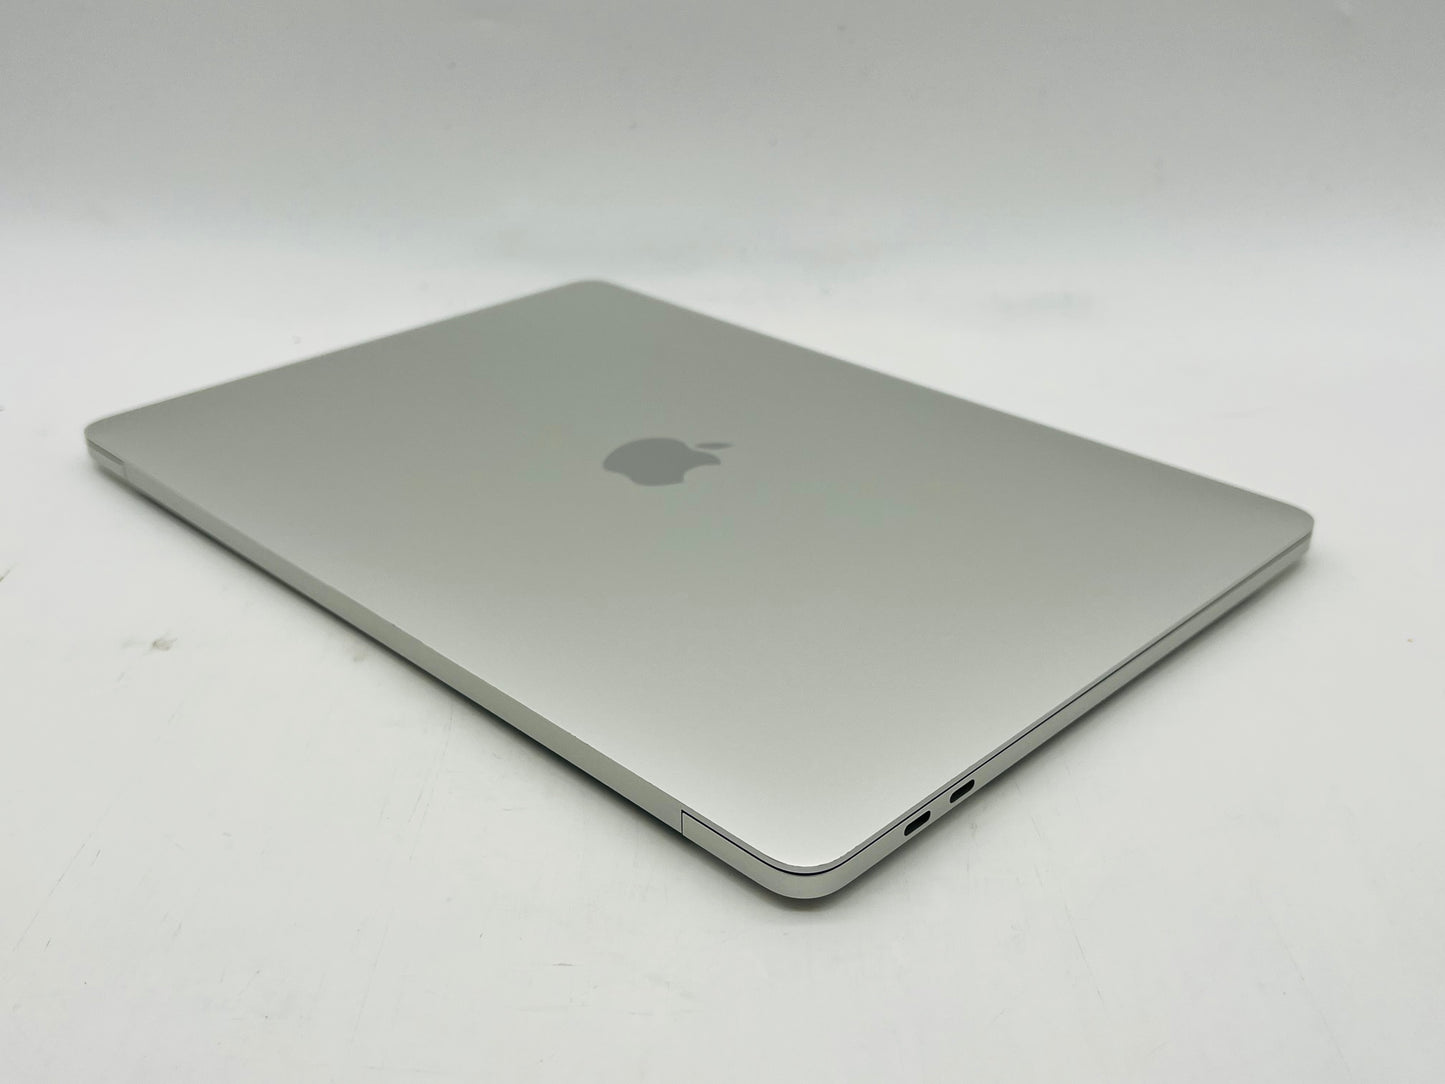 Apple 2019 MacBook Pro 13 in TB 2.4GHz i5 16GB RAM 512GB SSD IIPG655 - Very Good